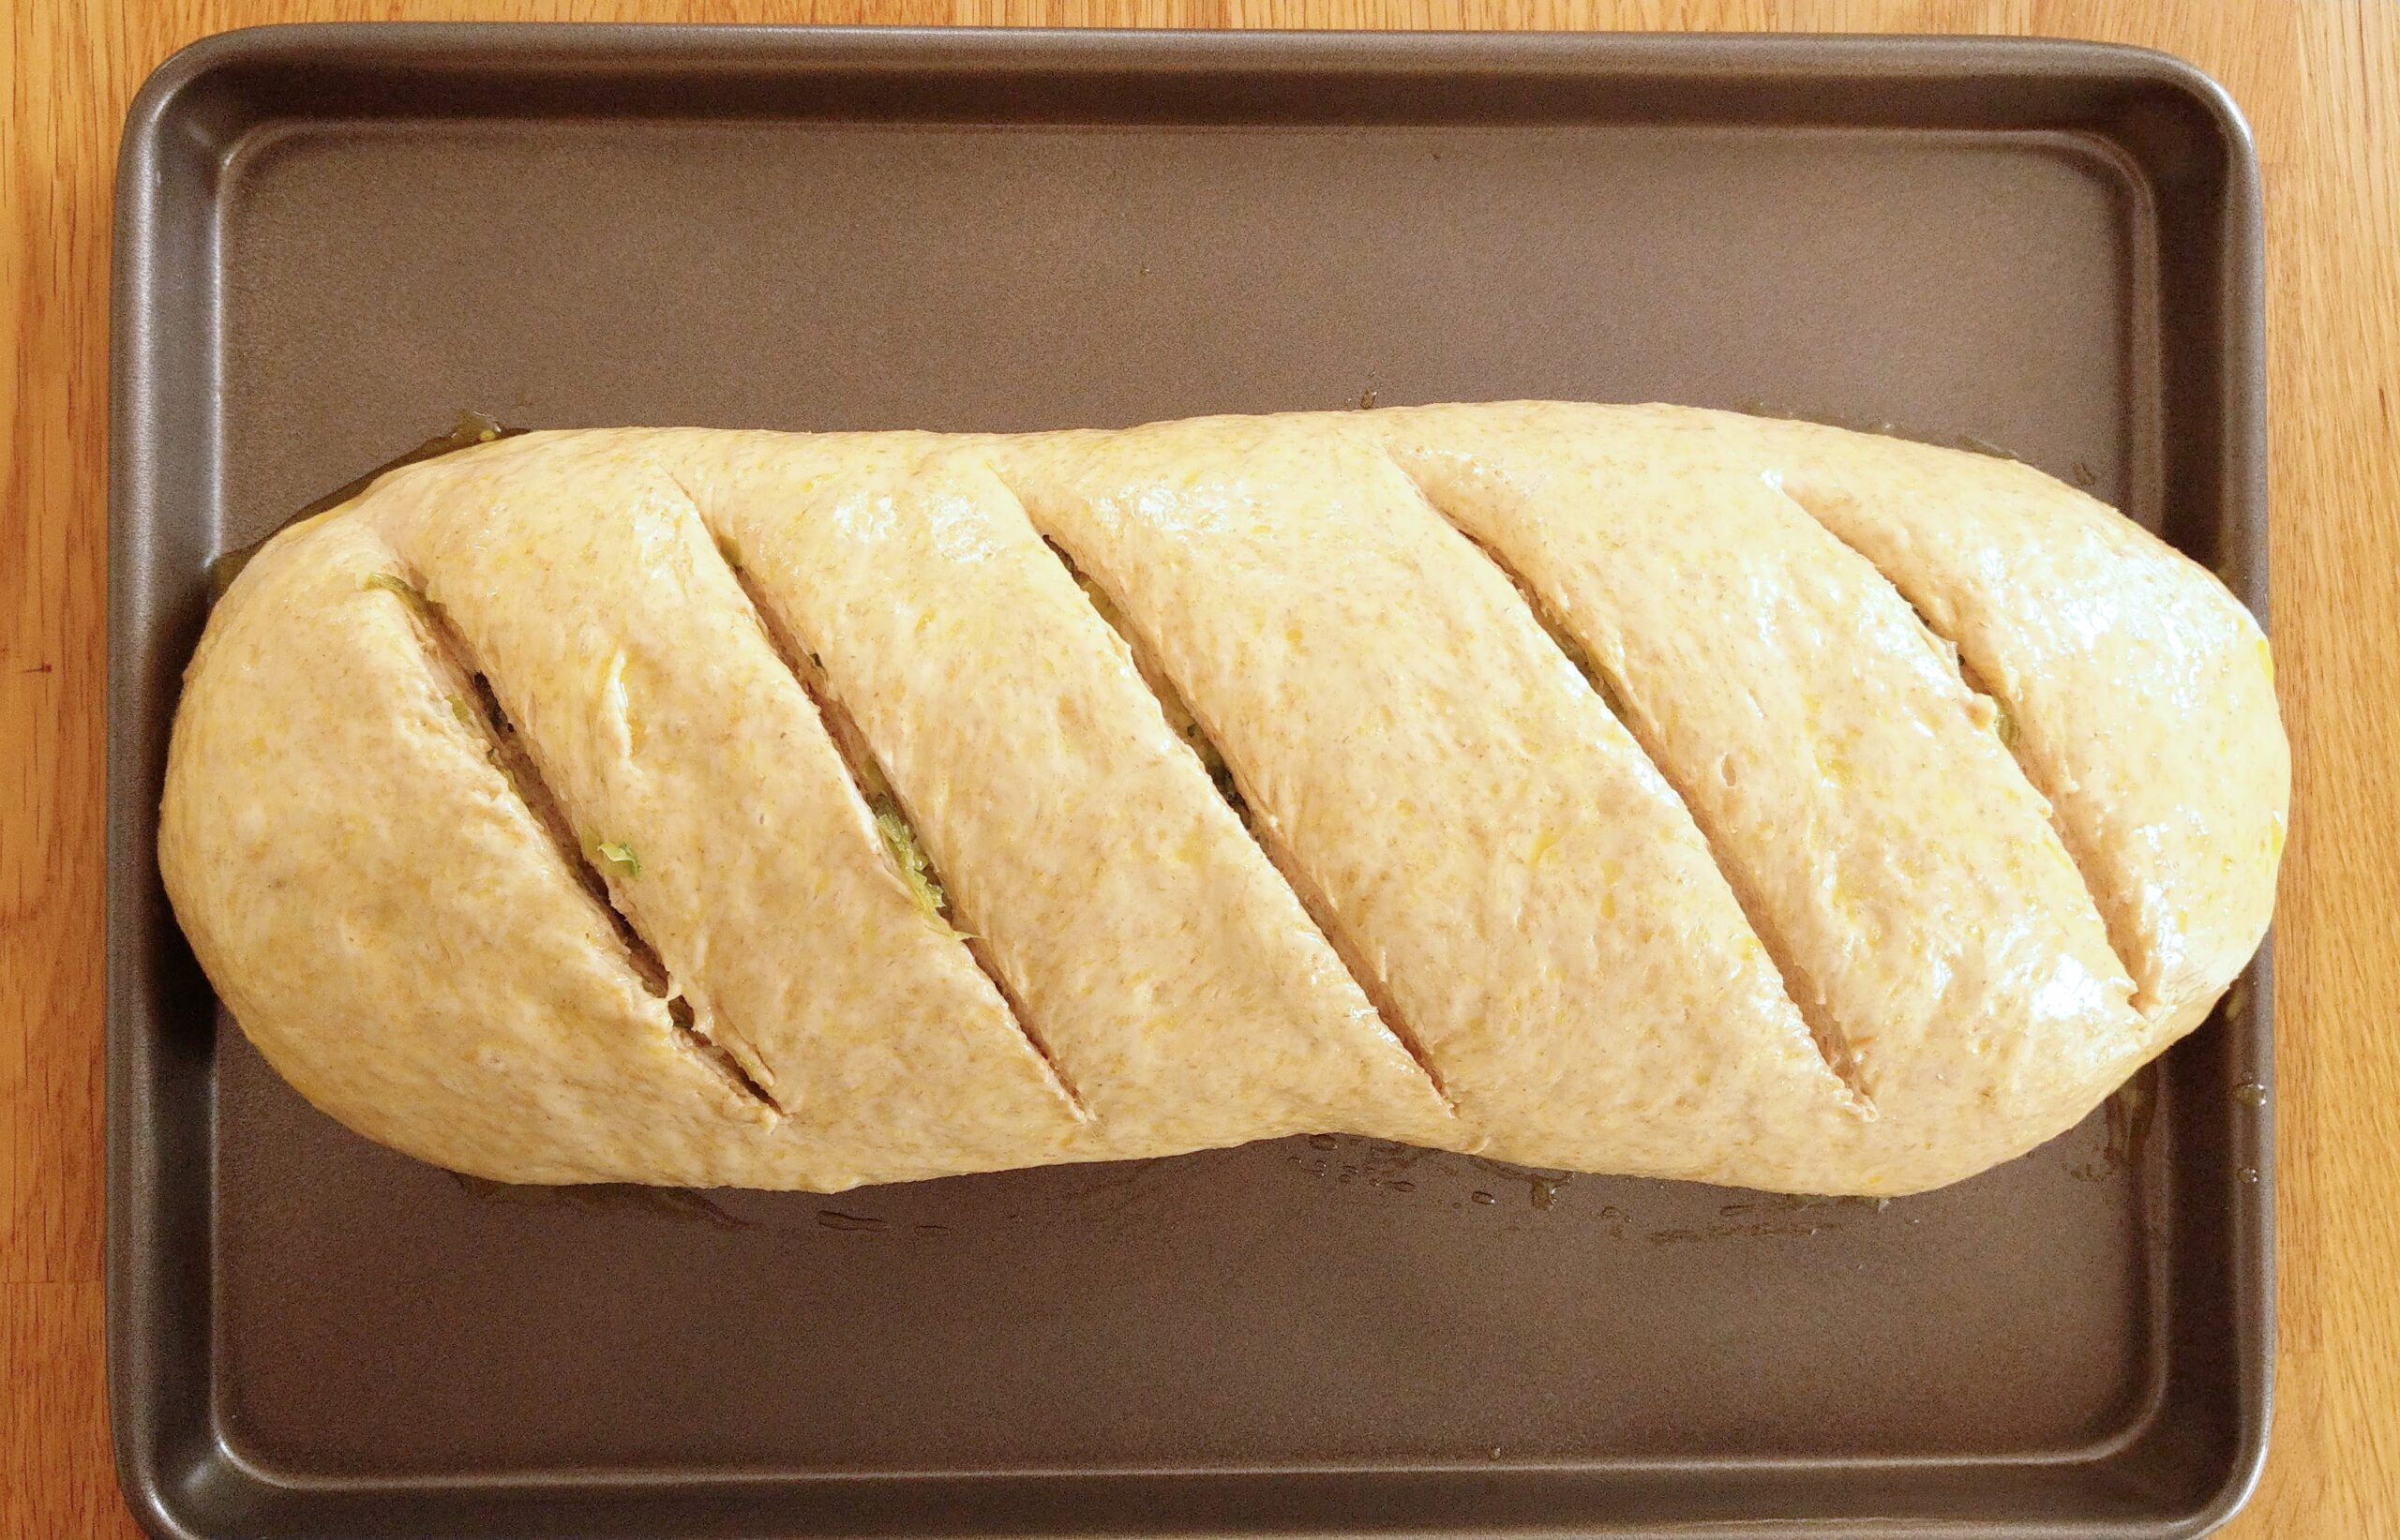 The loaf, scored